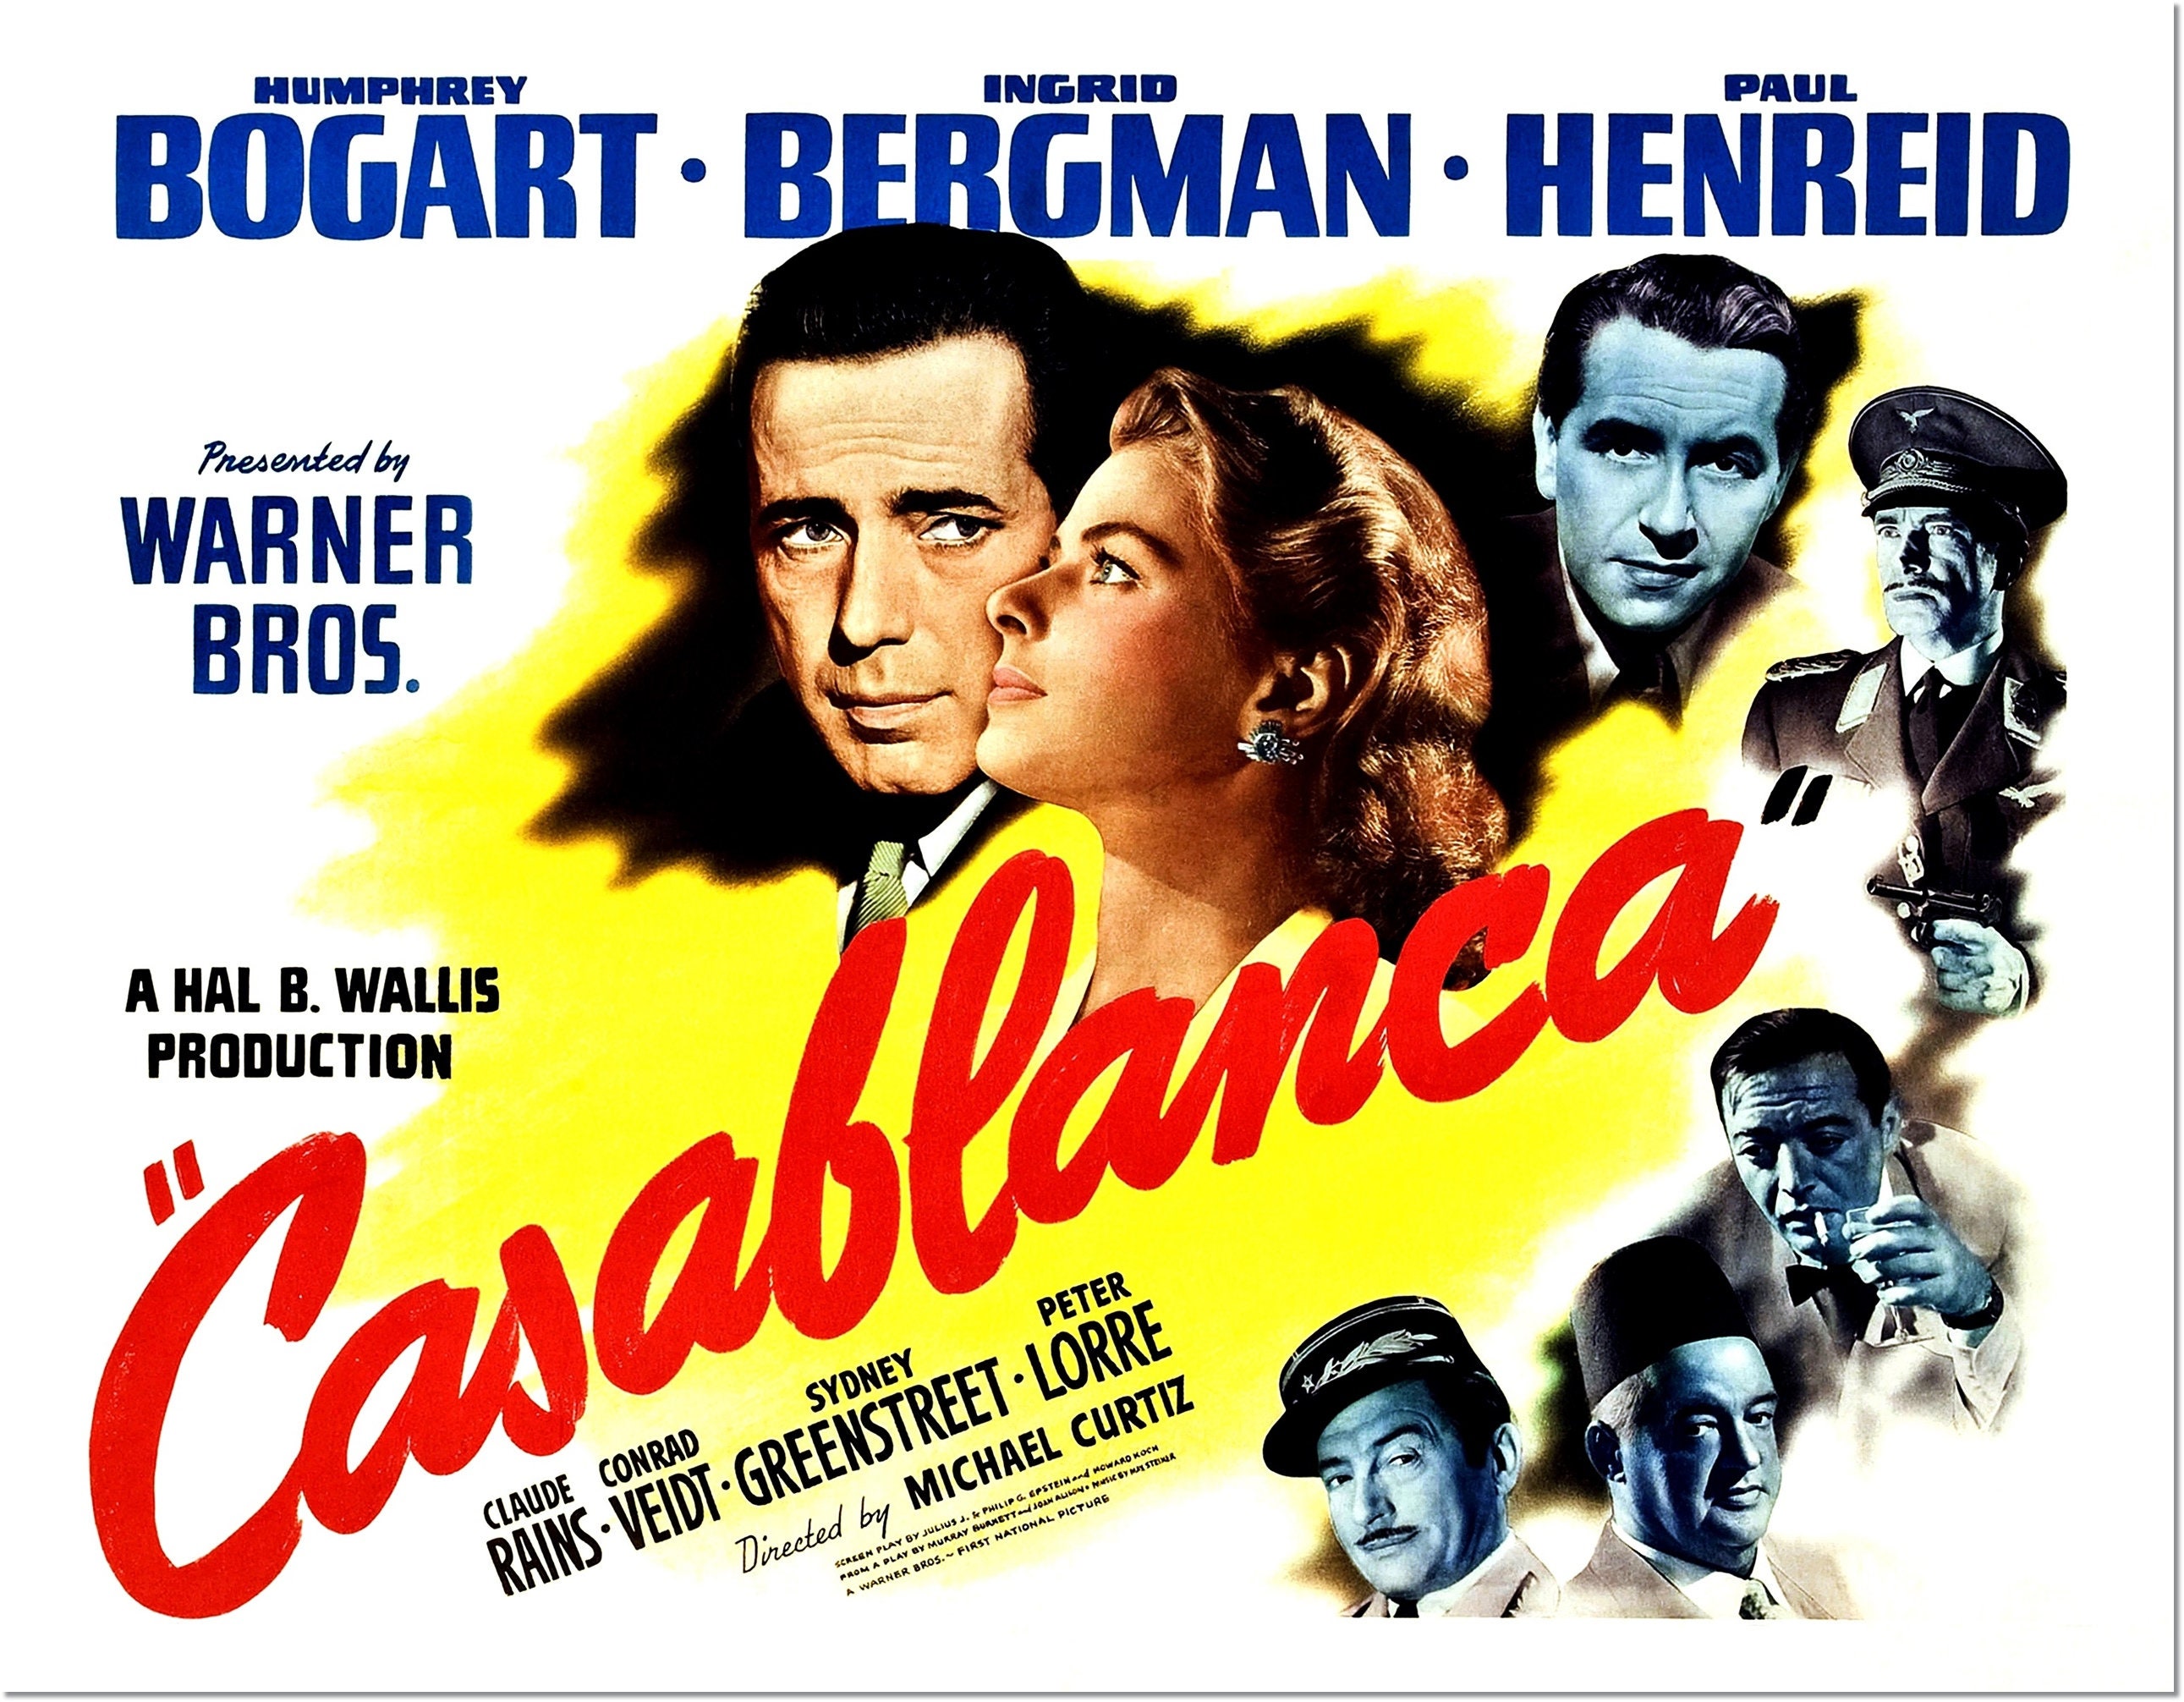 Wall Art Home Decor Classic Movie Poster Ingrid Bergman Cinema Cassic Casablanca Movie Poster Humphrey Bogart